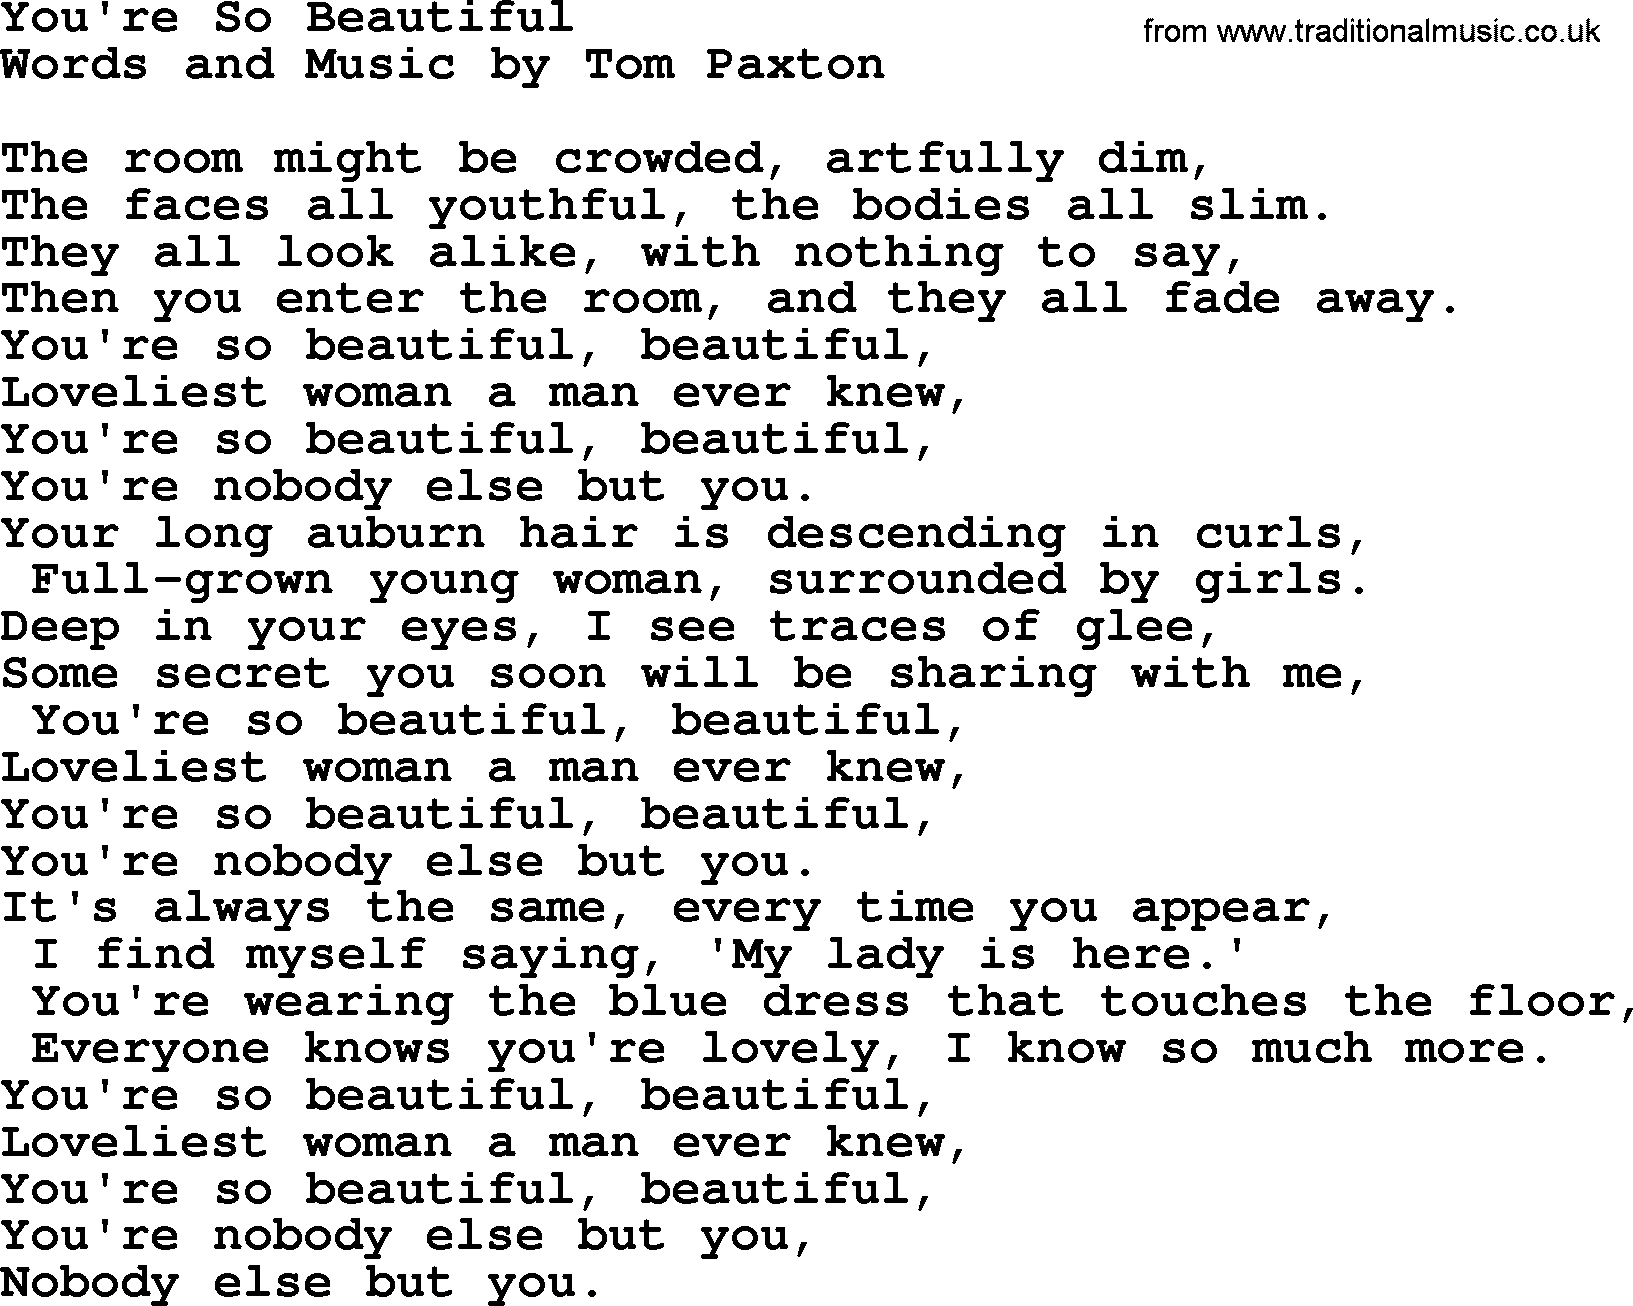 Tom Paxton song: You're So Beautiful, lyrics